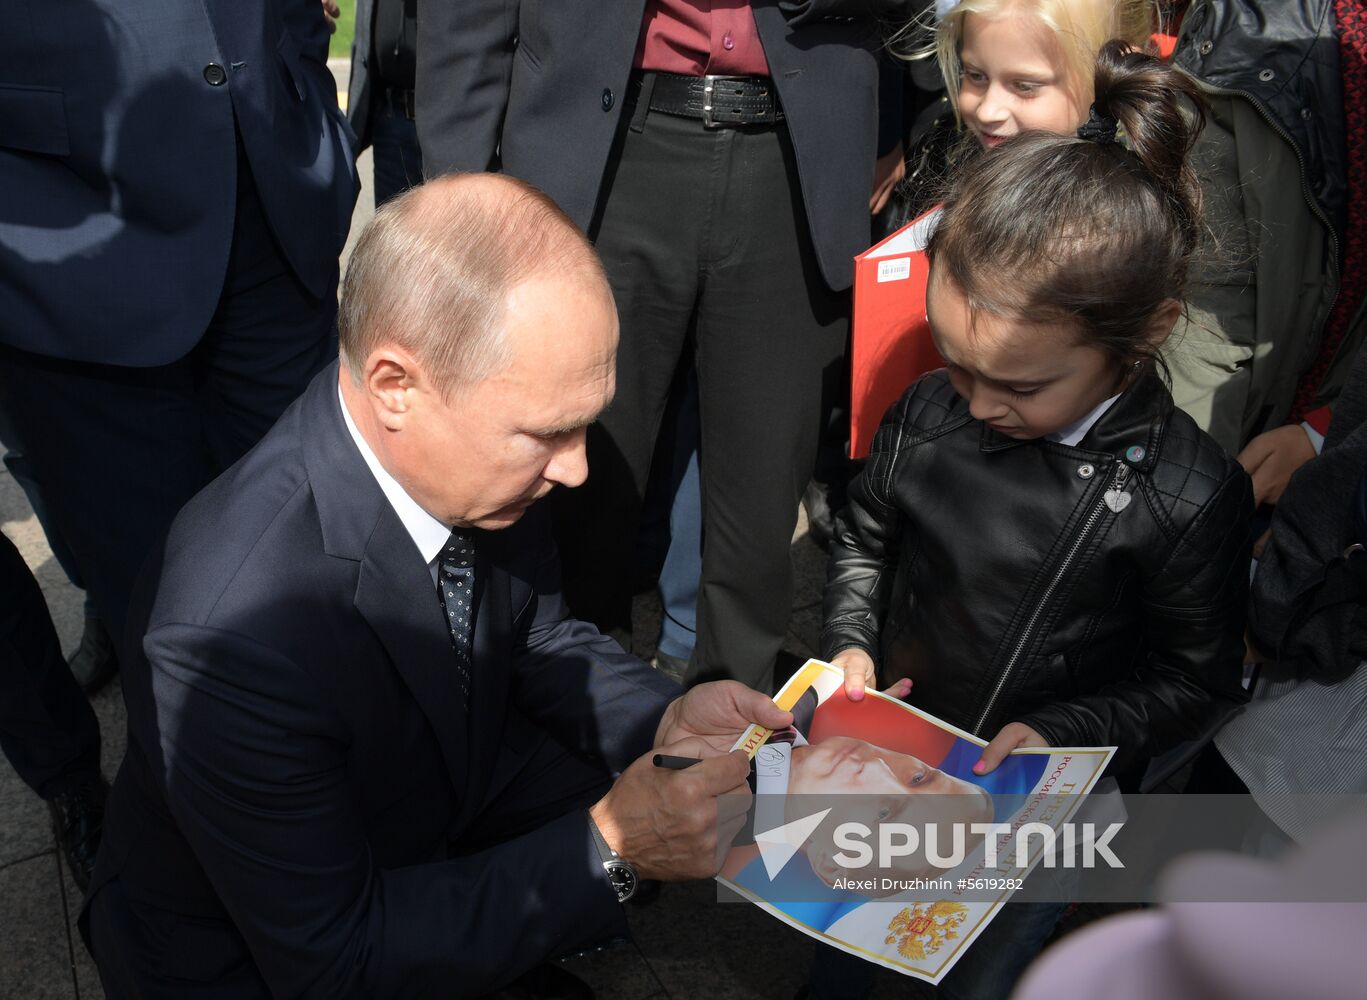 President Vladimir Putin’s working trip to Siberian Federal District